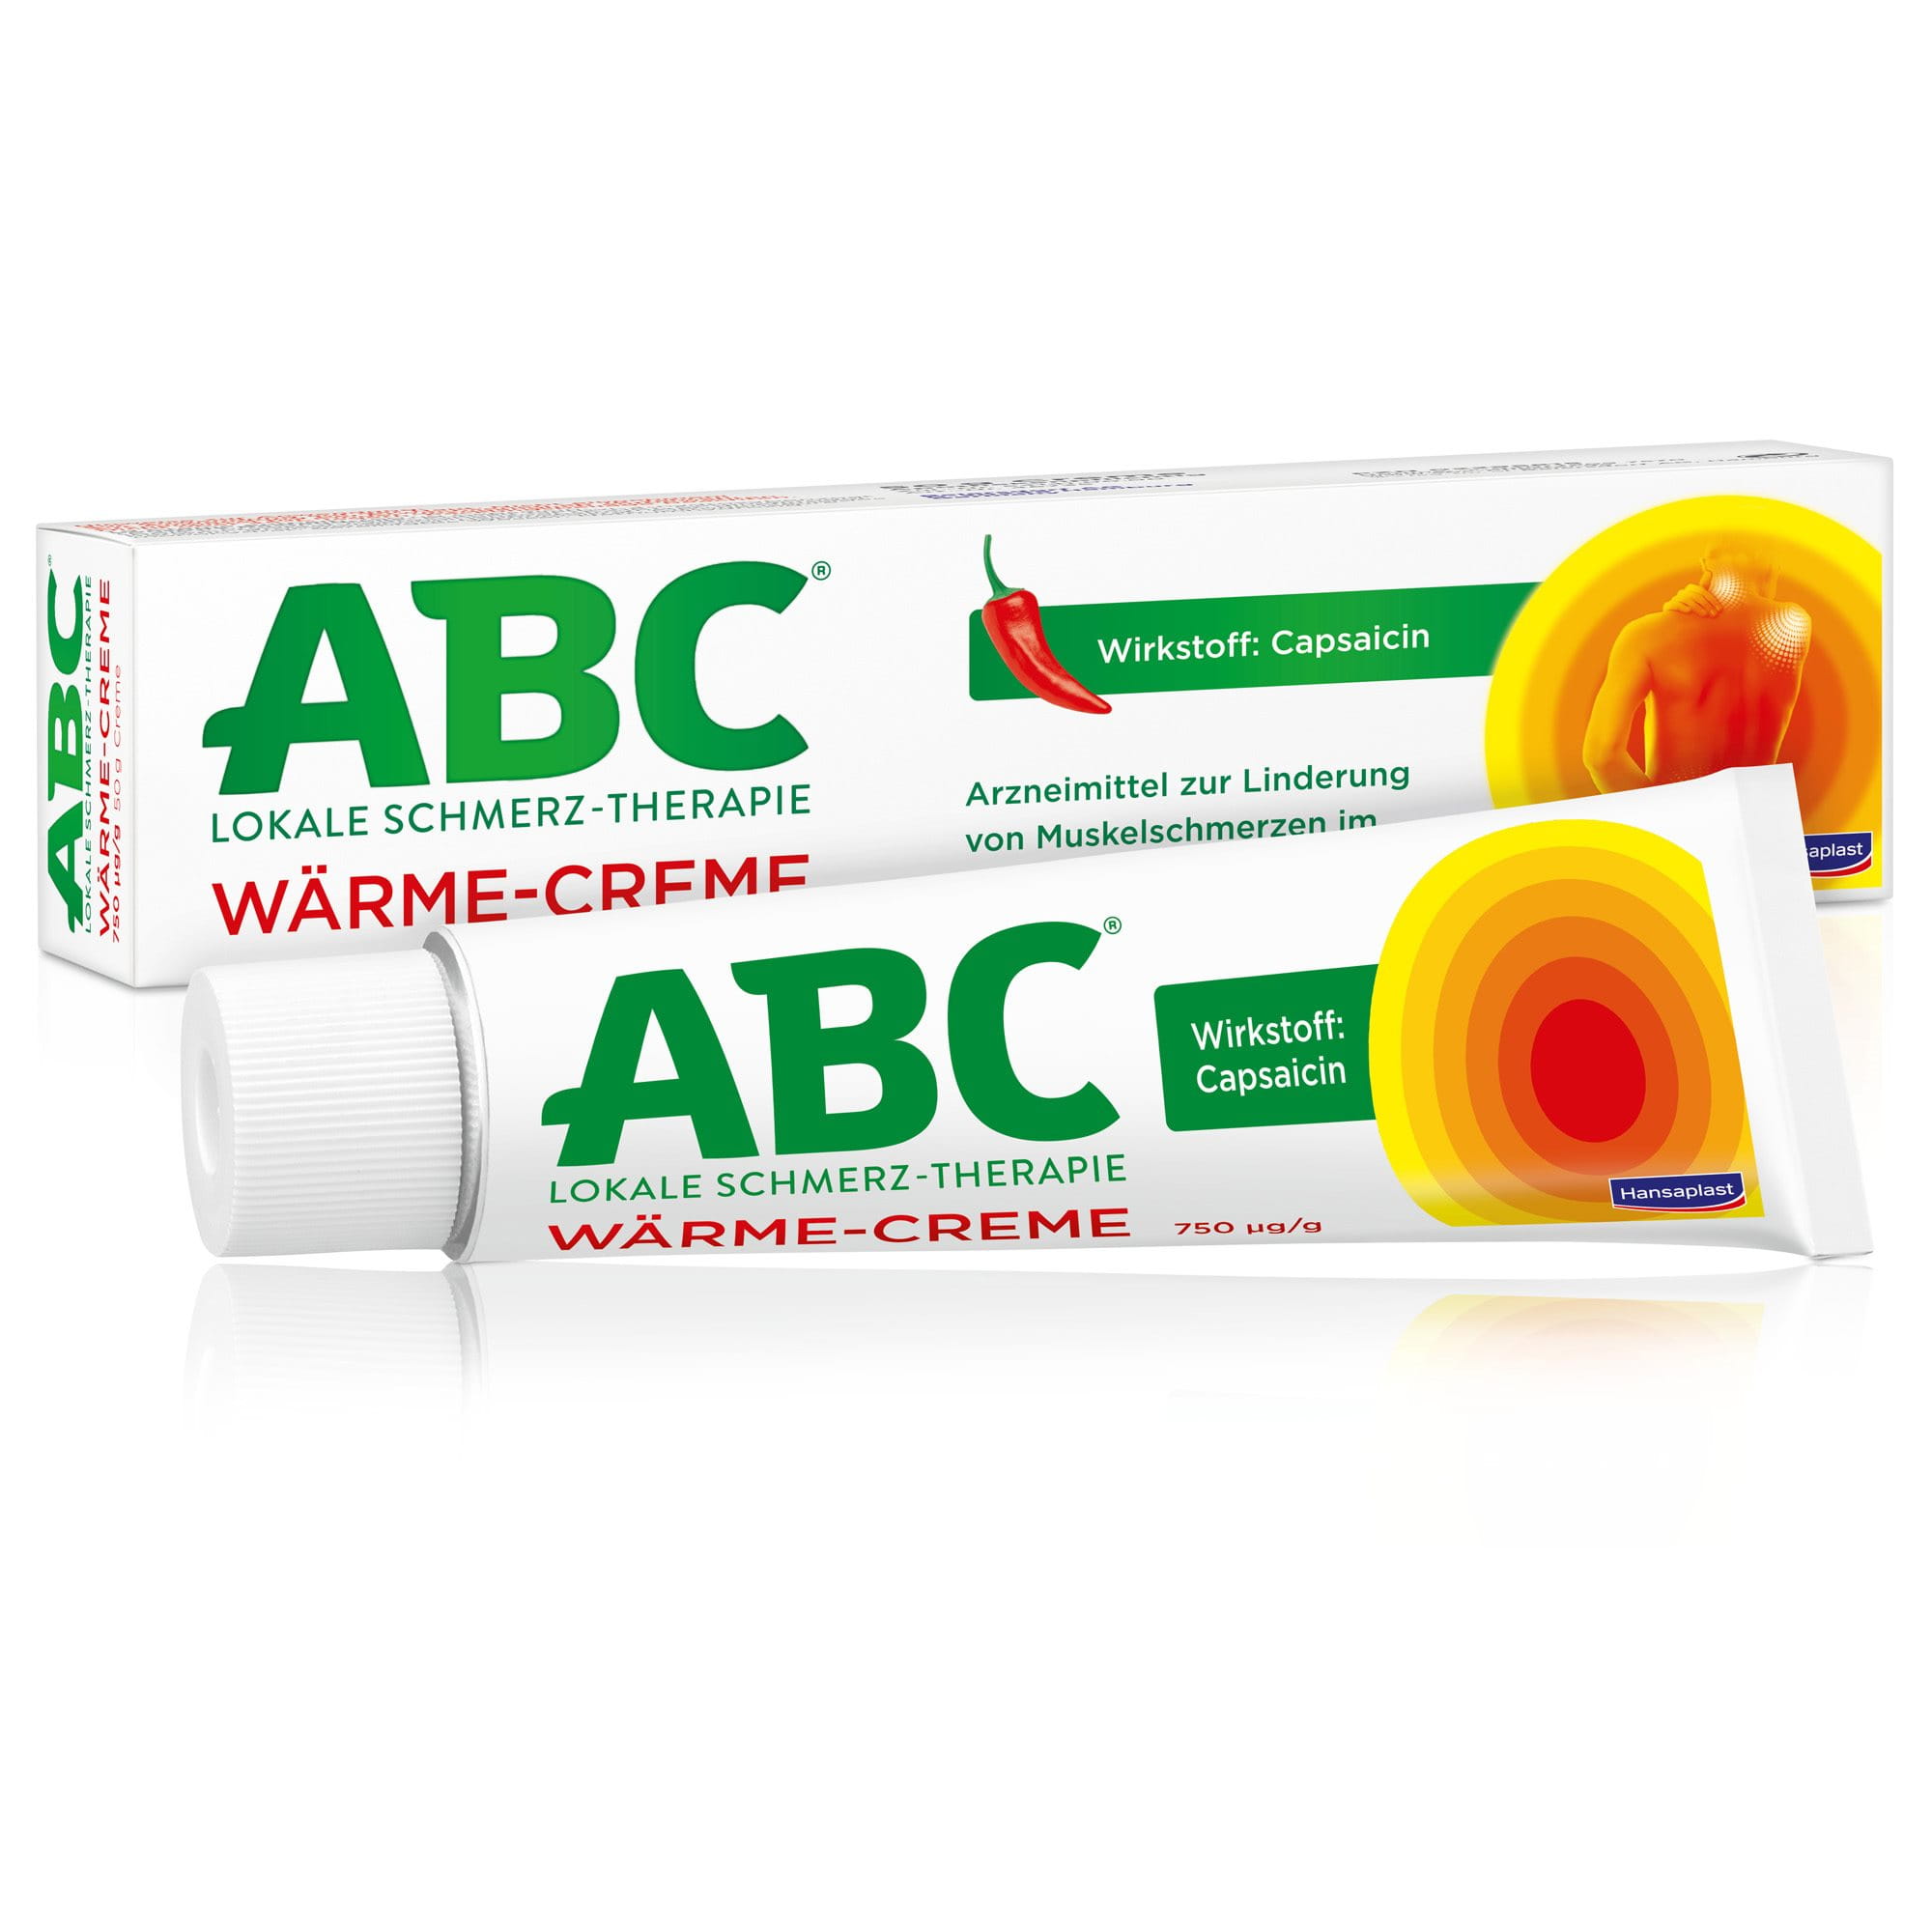 ABC Wärmecreme